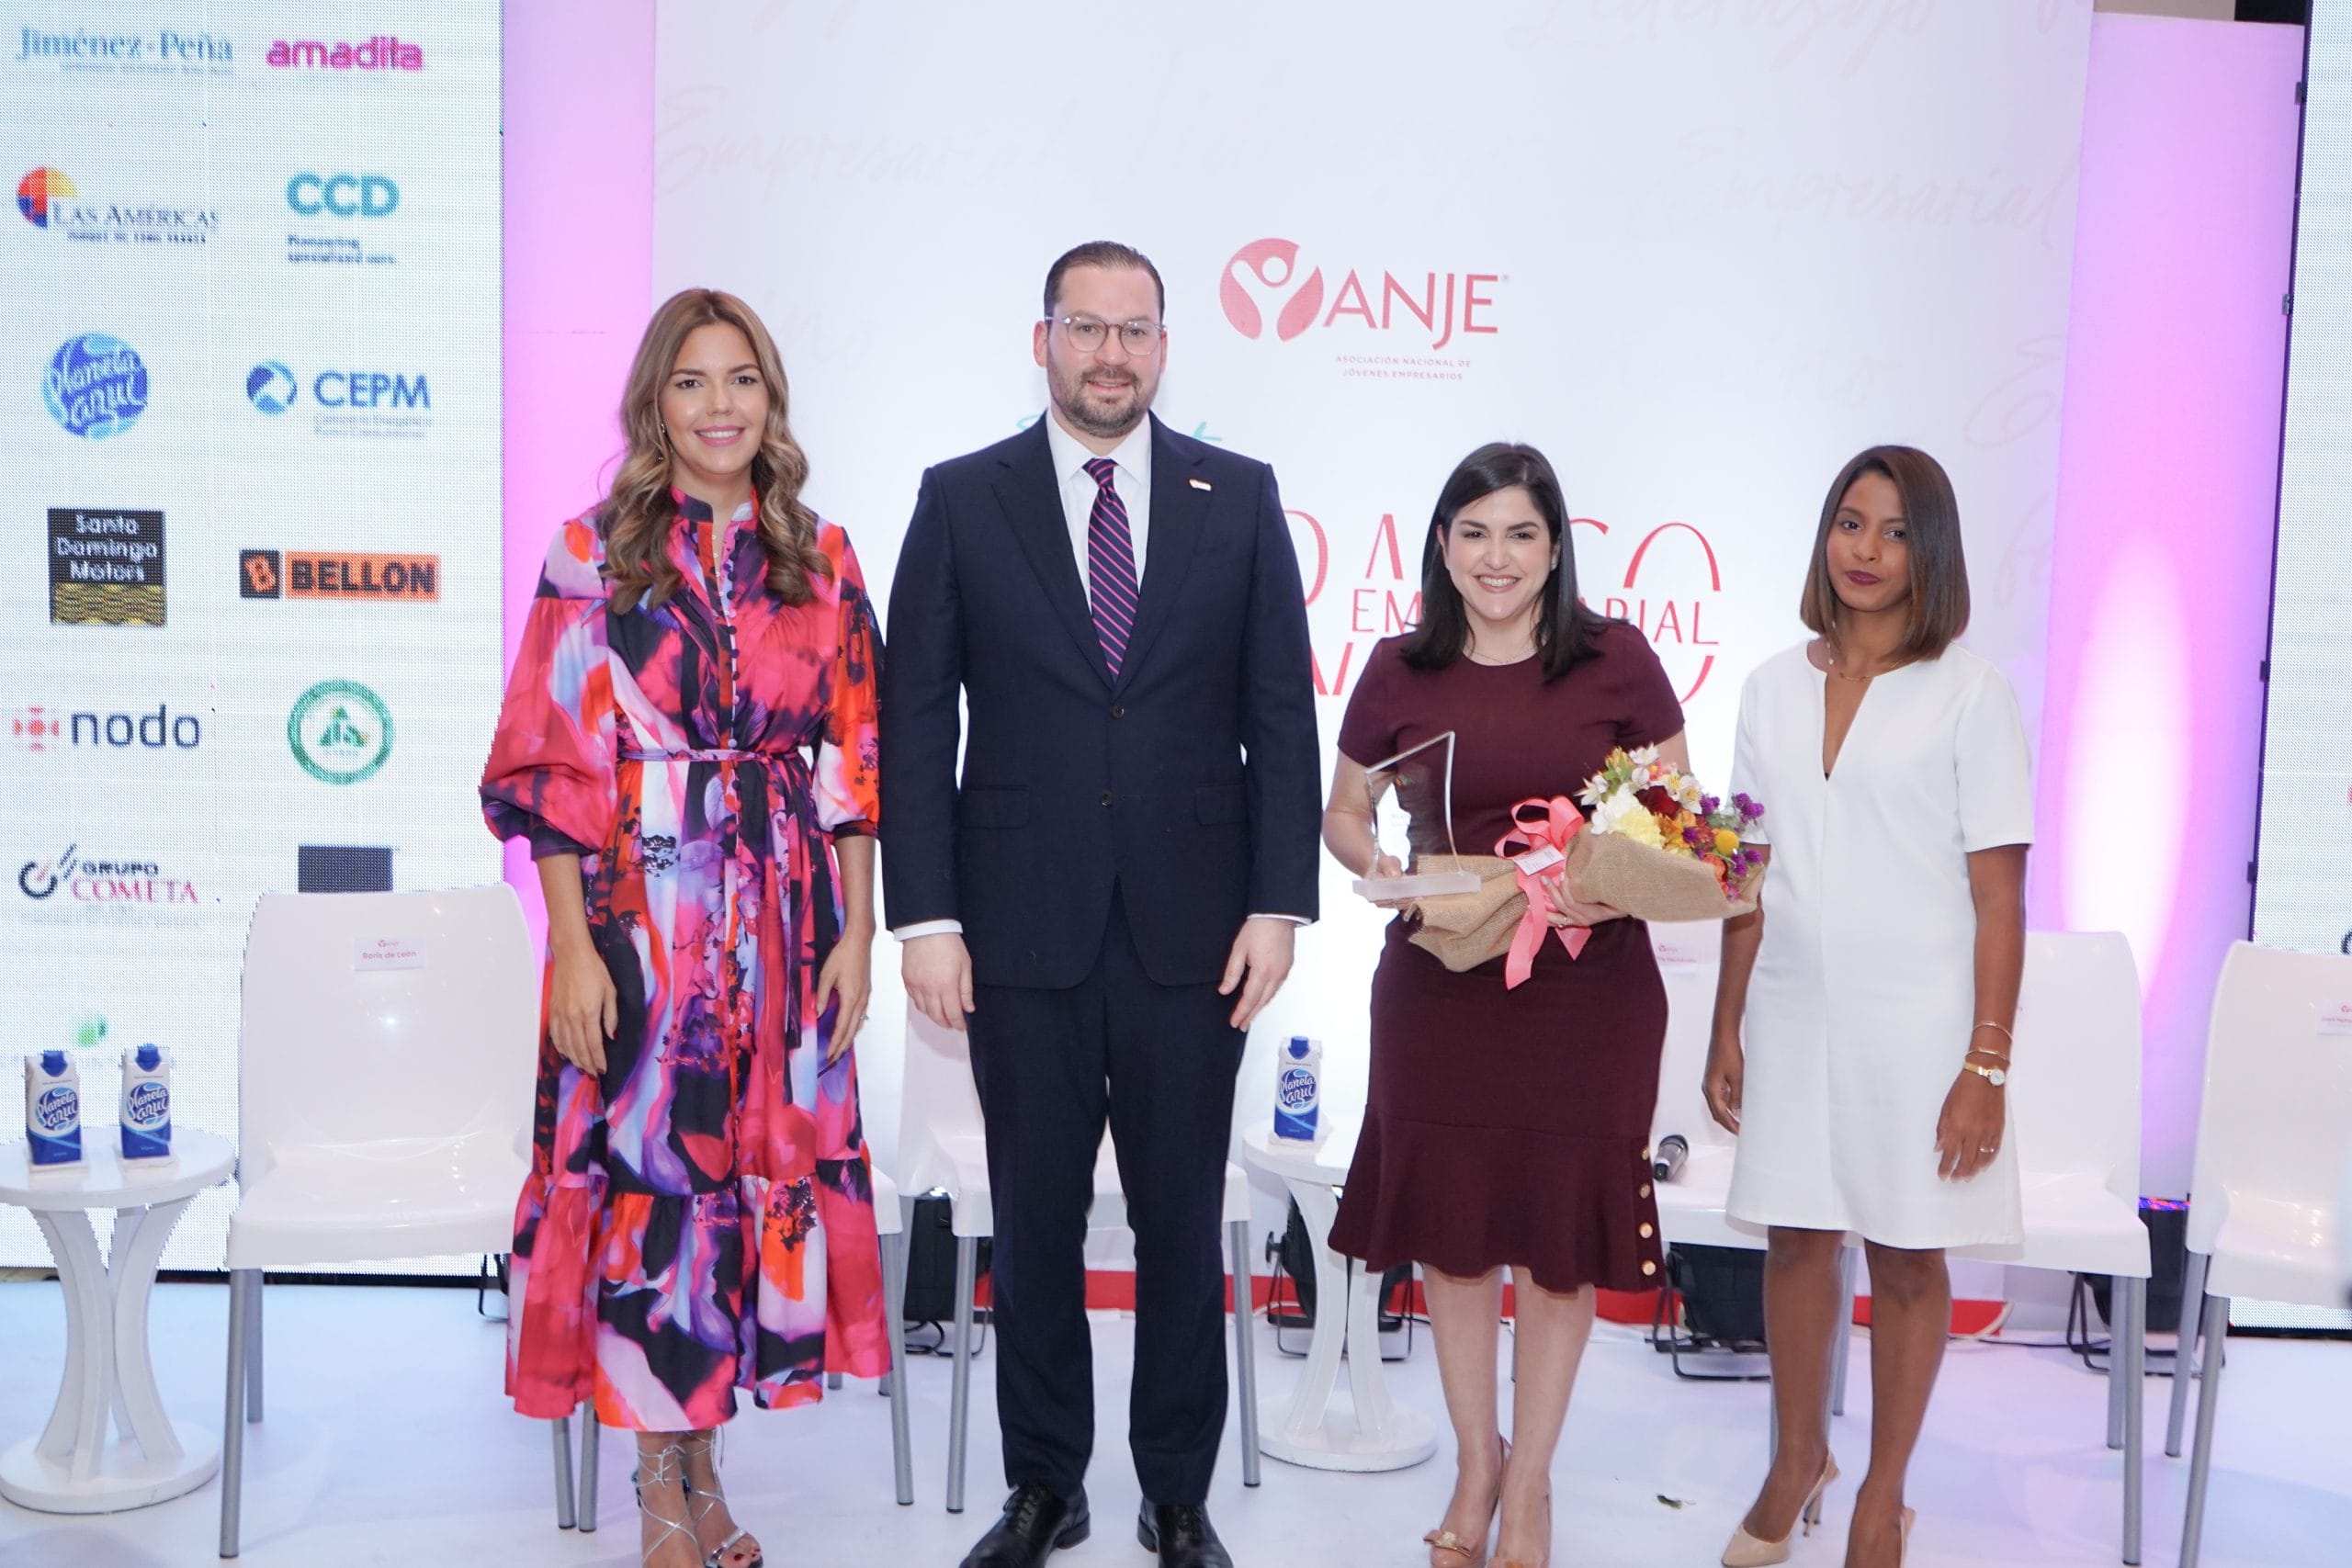 ANJE destaca liderazgo empresarial femenino en República Dominicana